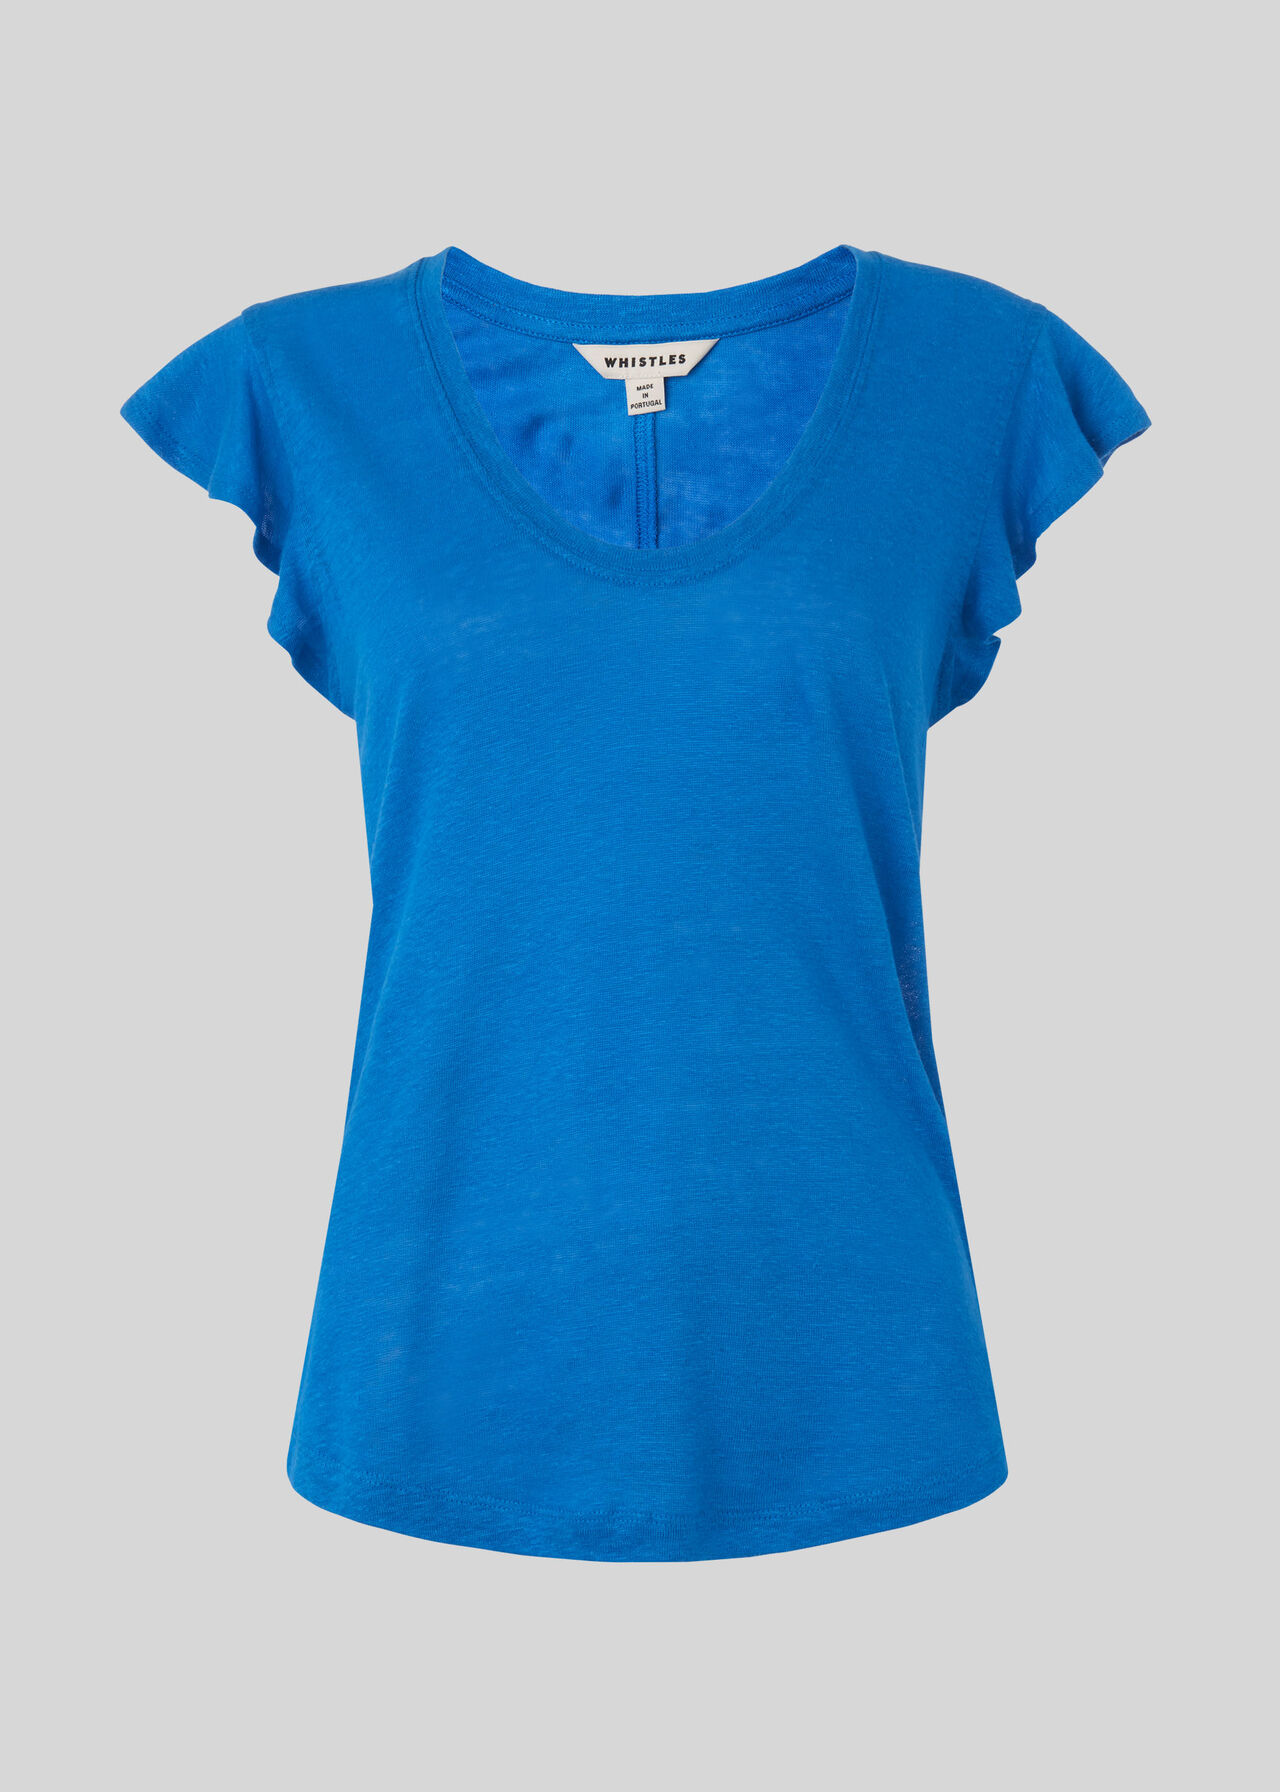 Blue Frill Sleeveless Linen Top | WHISTLES